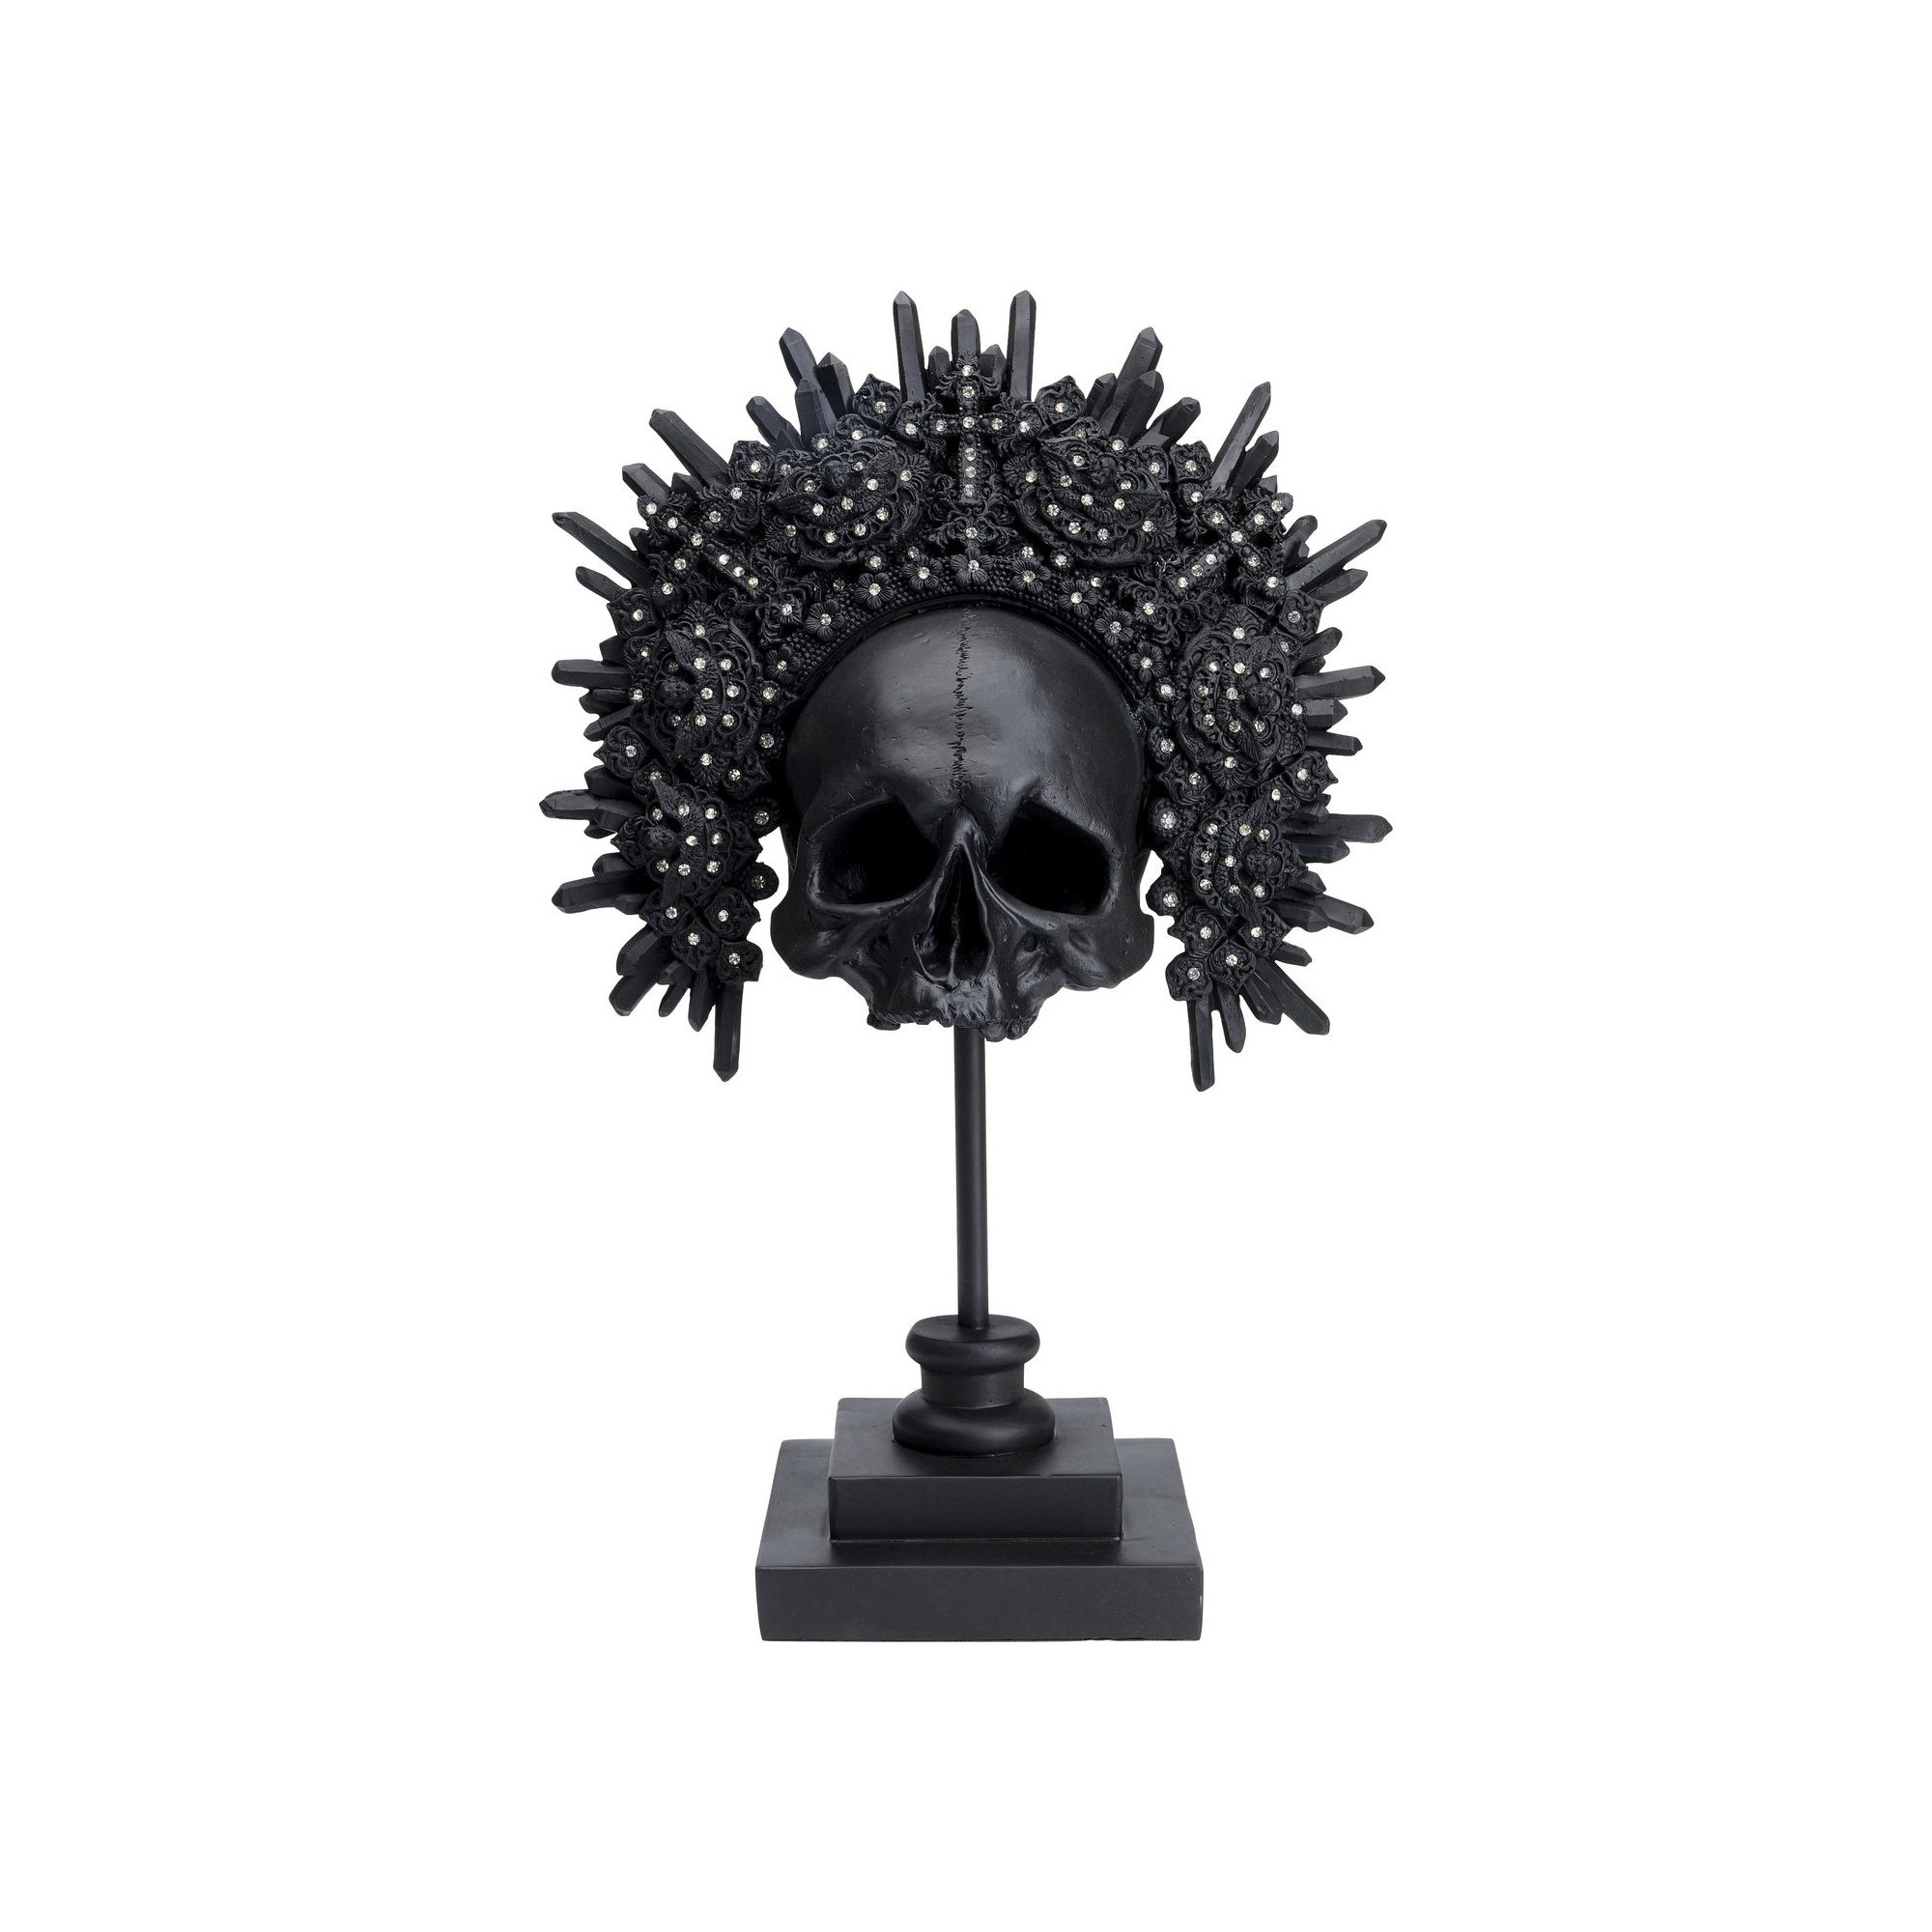 Objet décoratif King Skull noir